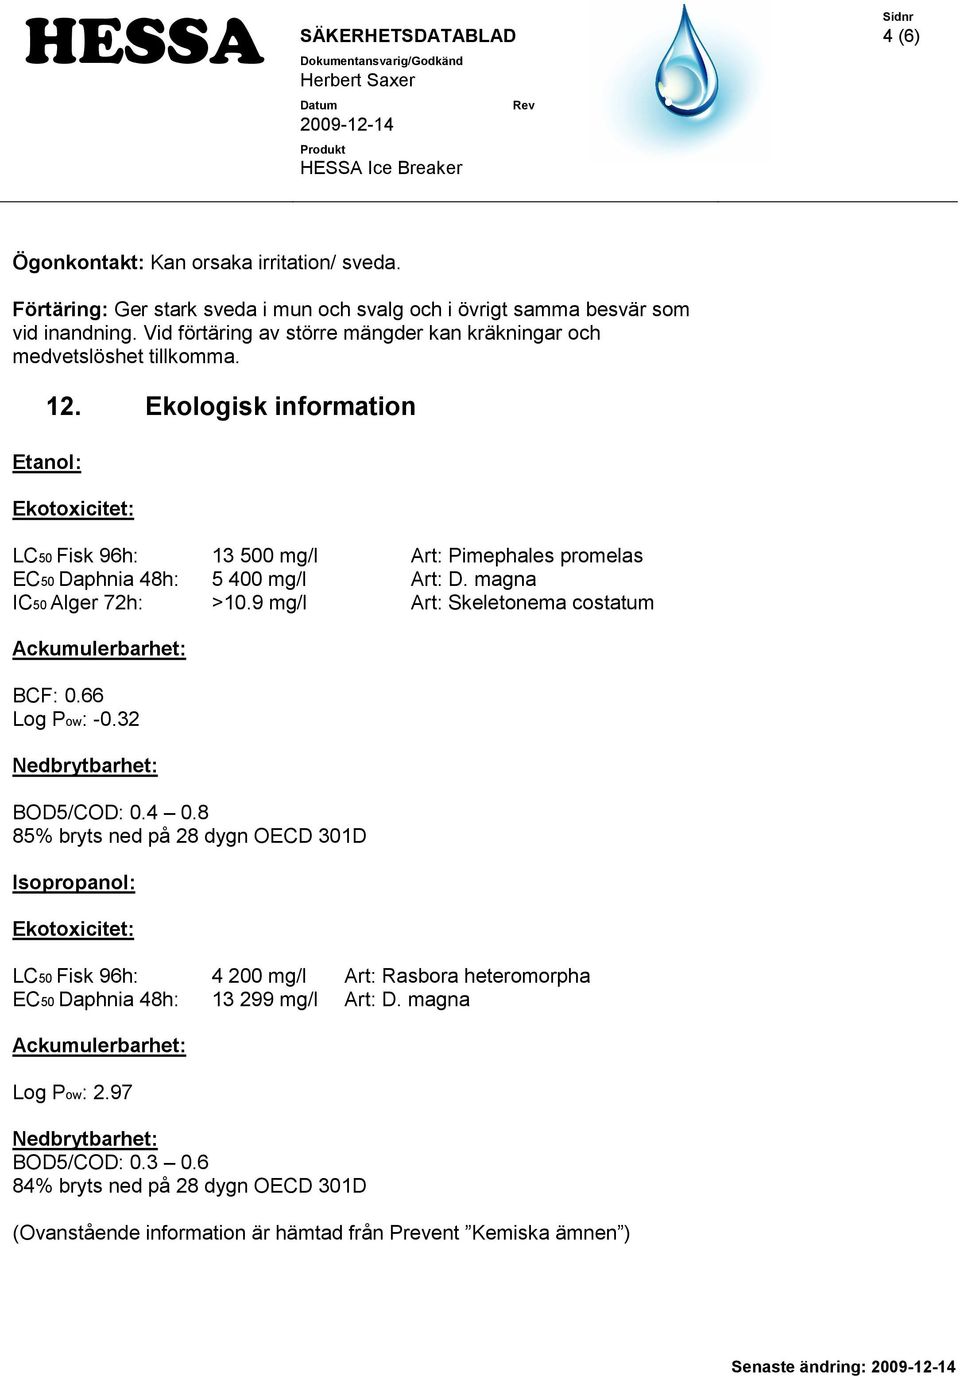 Ekologisk information Etanol: Ekotoxicitet: LC50 Fisk 96h: 13 500 mg/l Art: Pimephales promelas EC50 Daphnia 48h: 5 400 mg/l Art: D. magna IC50 Alger 72h: >10.